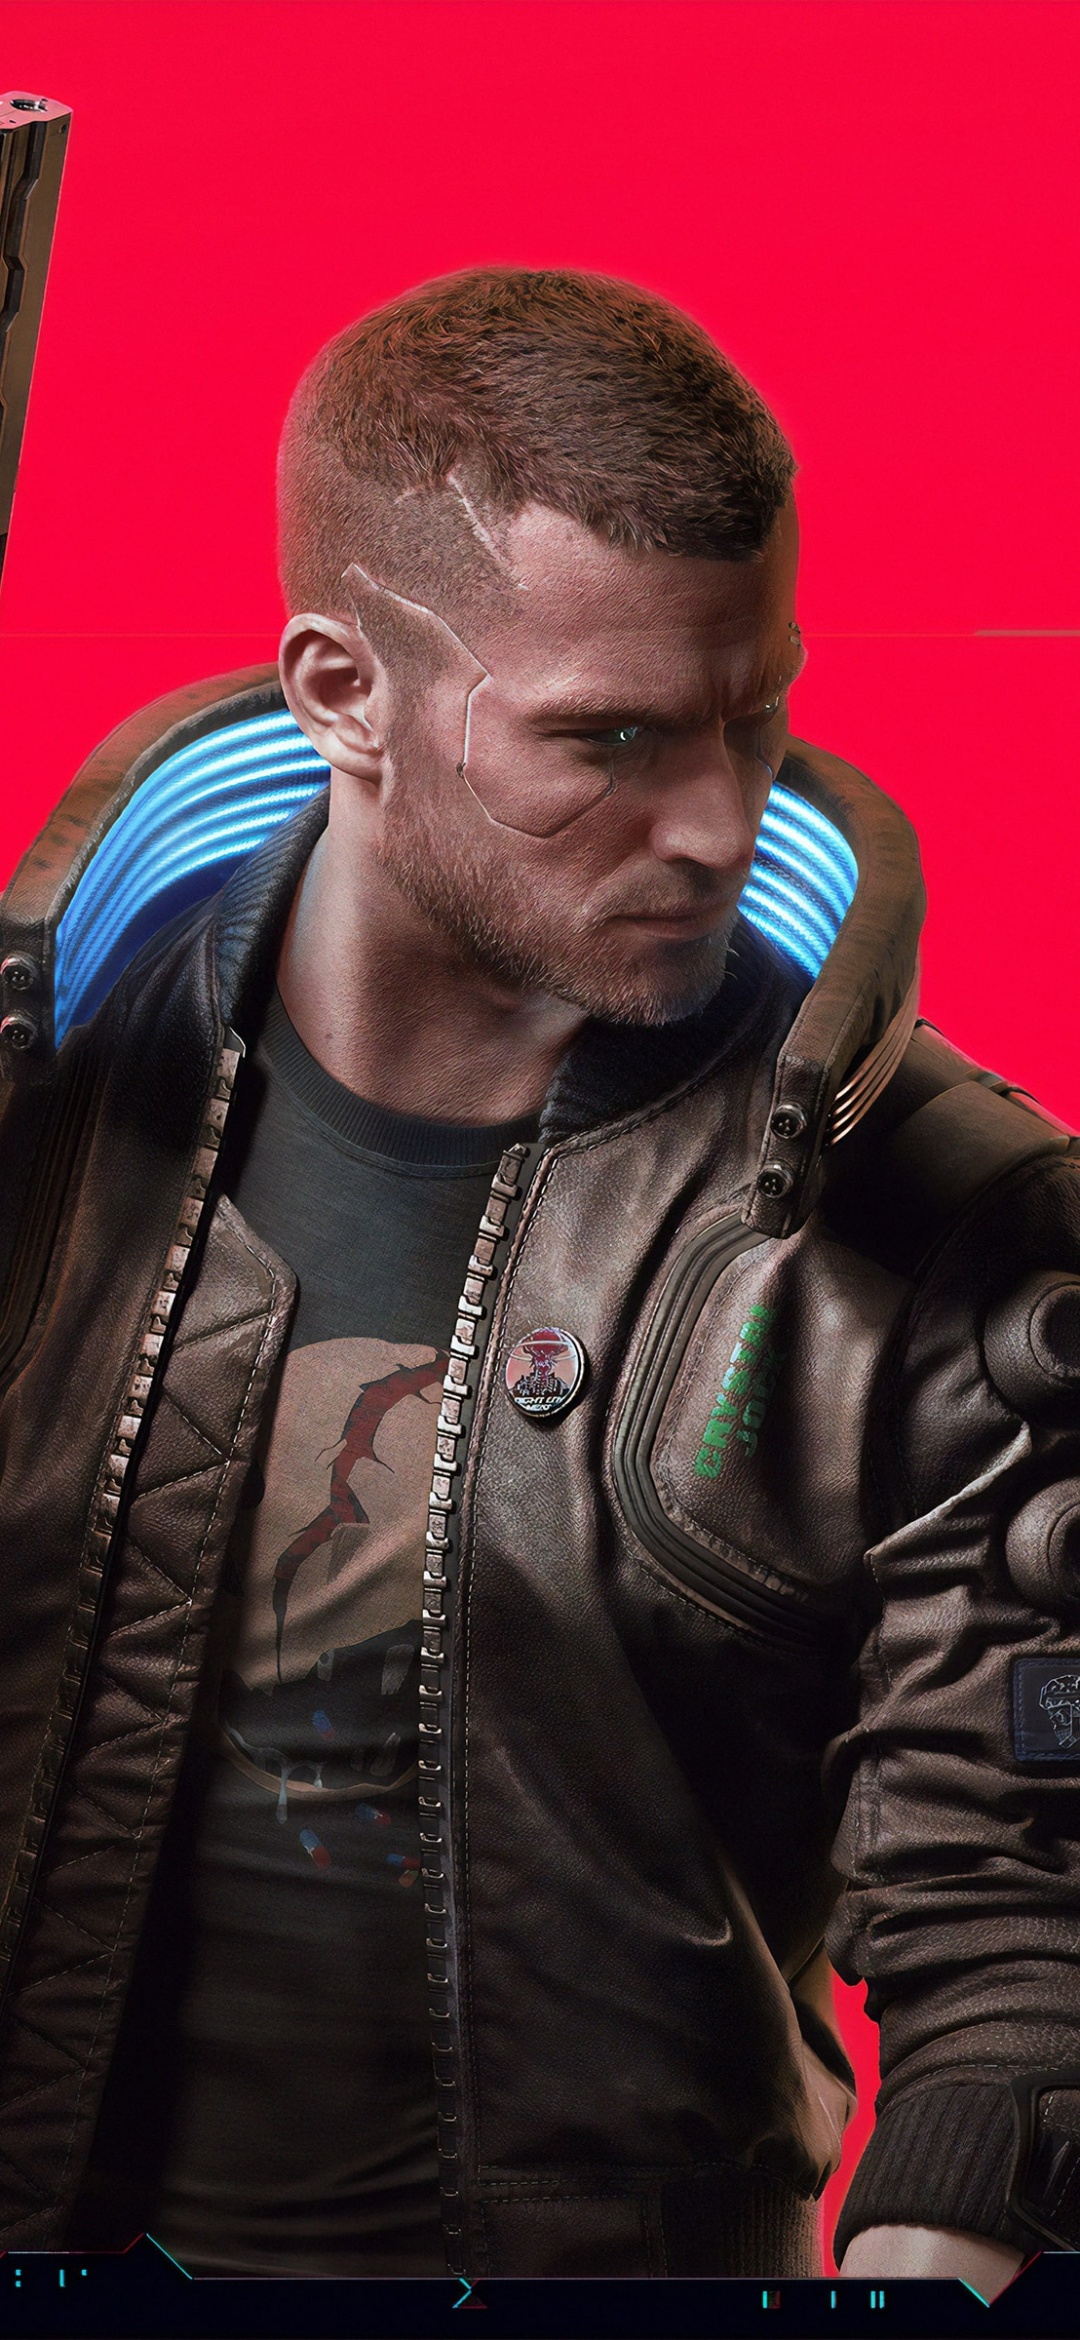 Cyberpunk 2077 Wallpaper 4K, Character V, Red background, Xbox Series X